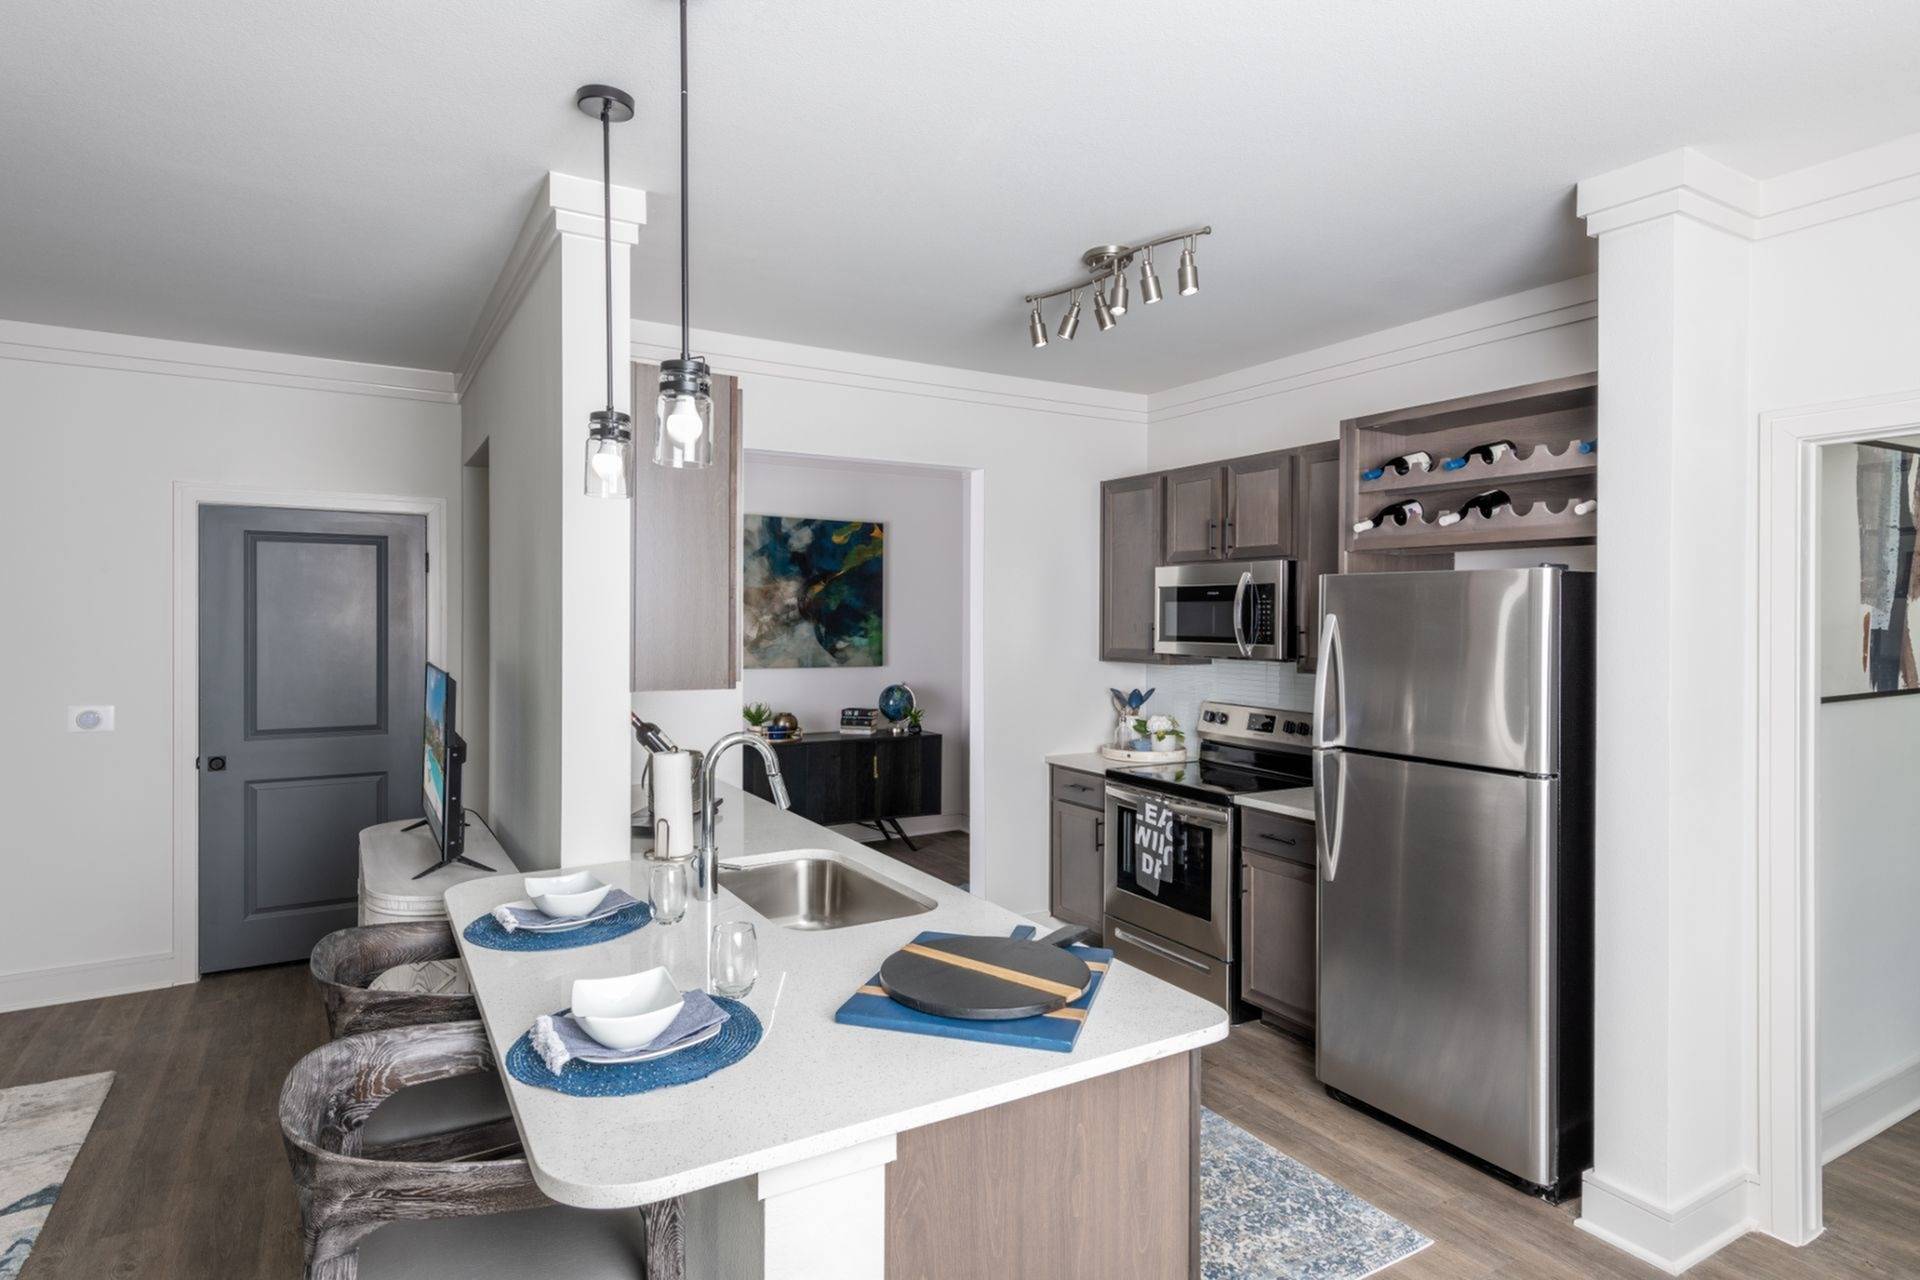 Modern Kitchen | Fort Worth TX Apartment For Rent | Alleia at Presidio